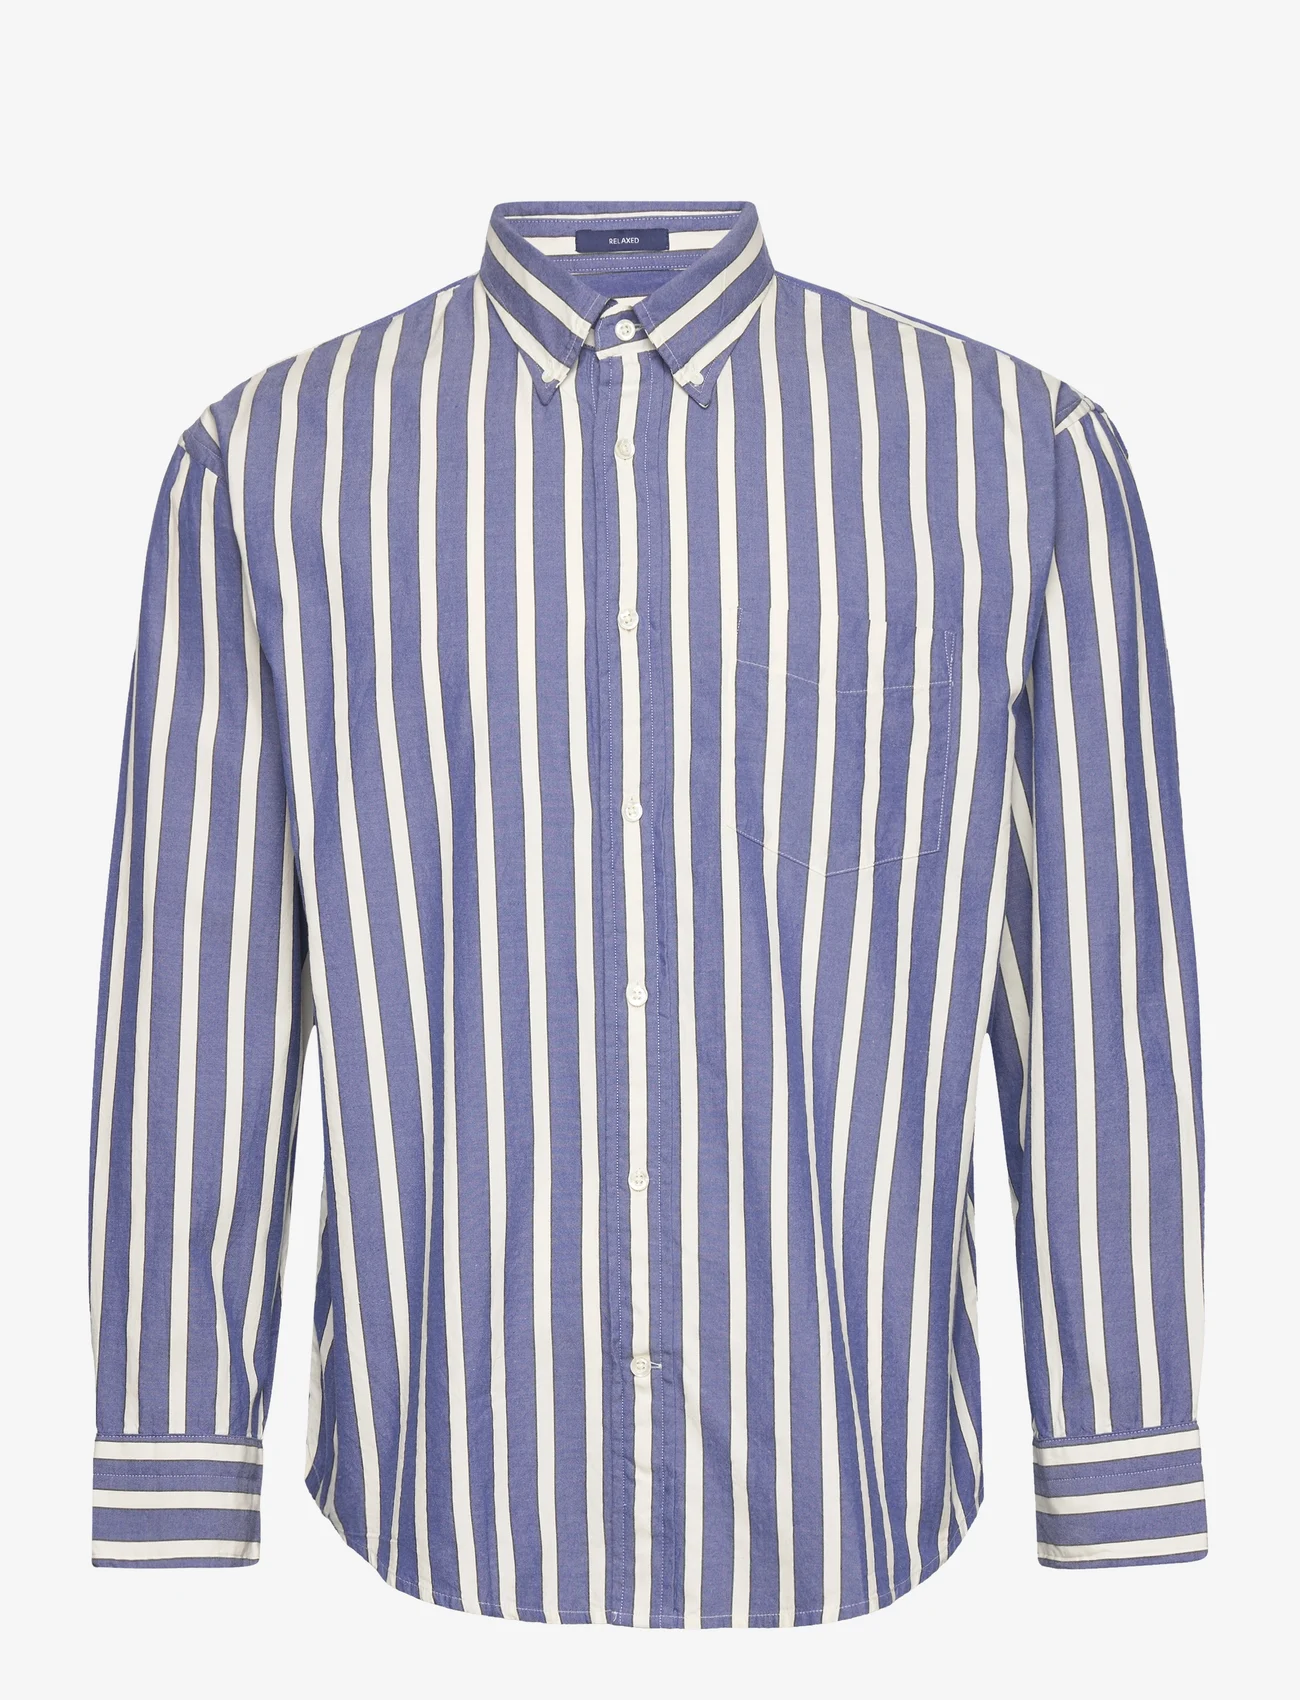 GANT - REL DREAMY OXFORD STRIPE SHIRT - oxford-skjortor - college blue - 0